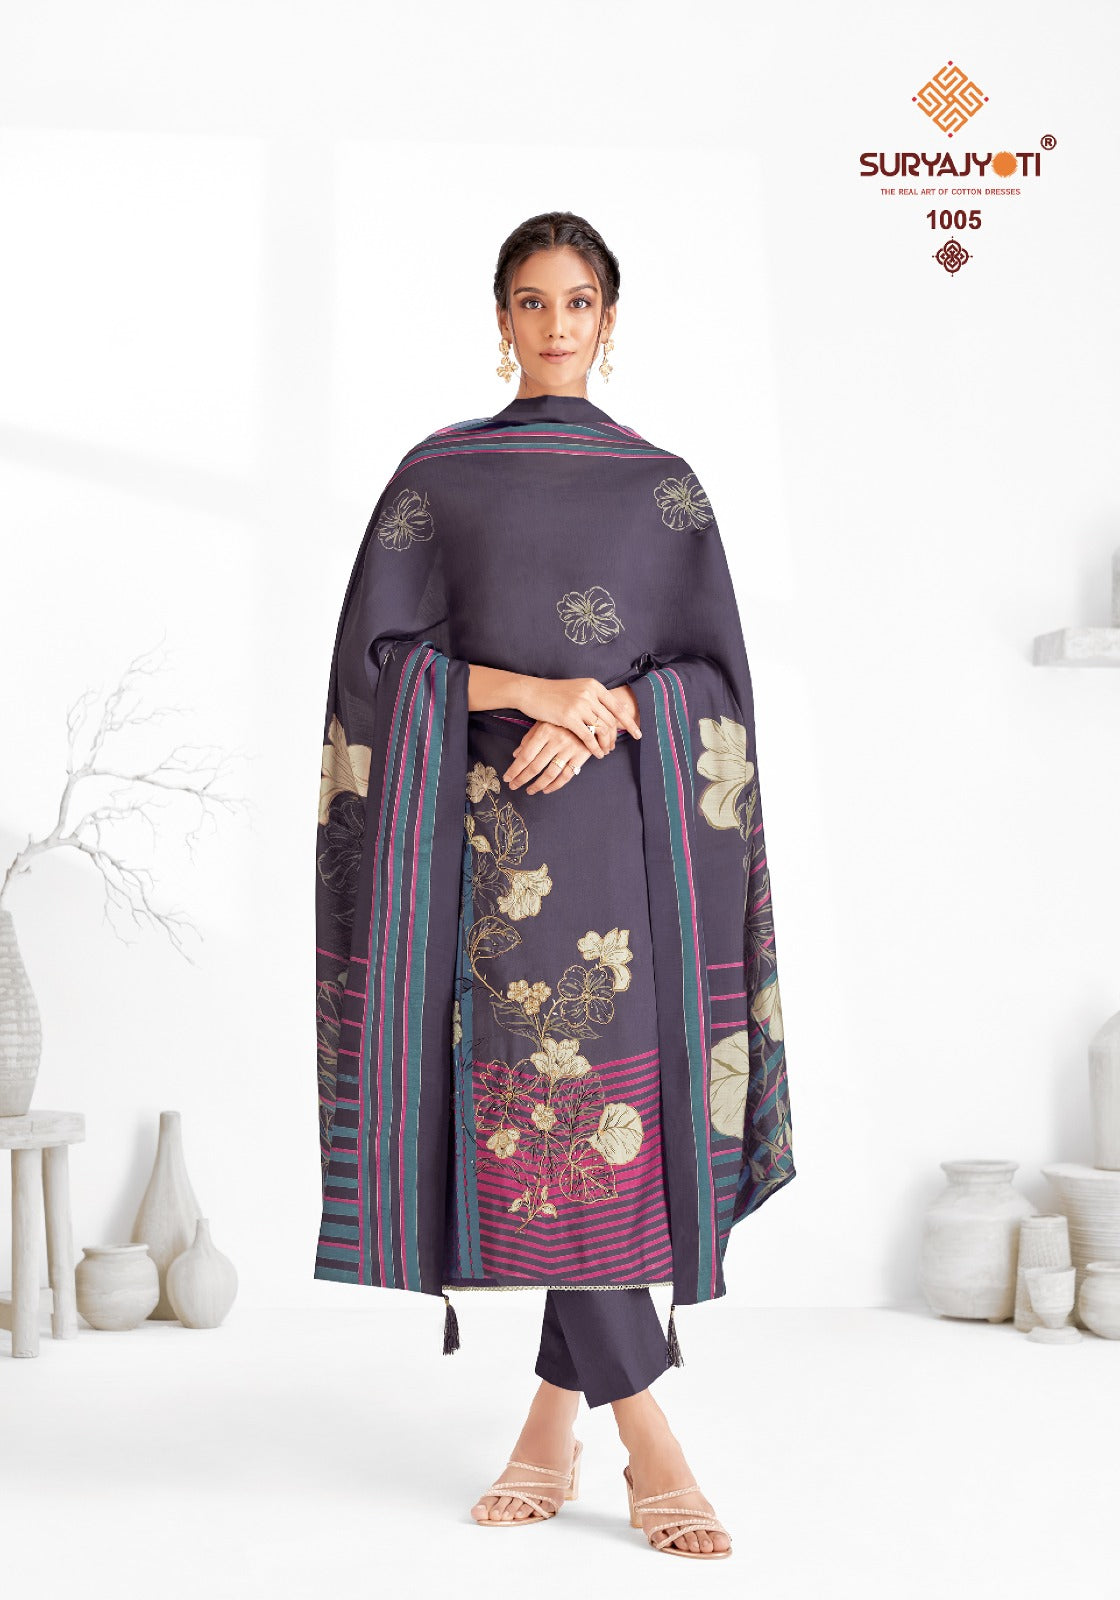 Prabha Vol 1 Suryajyoti Modal Pant Style Suits Wholesaler India